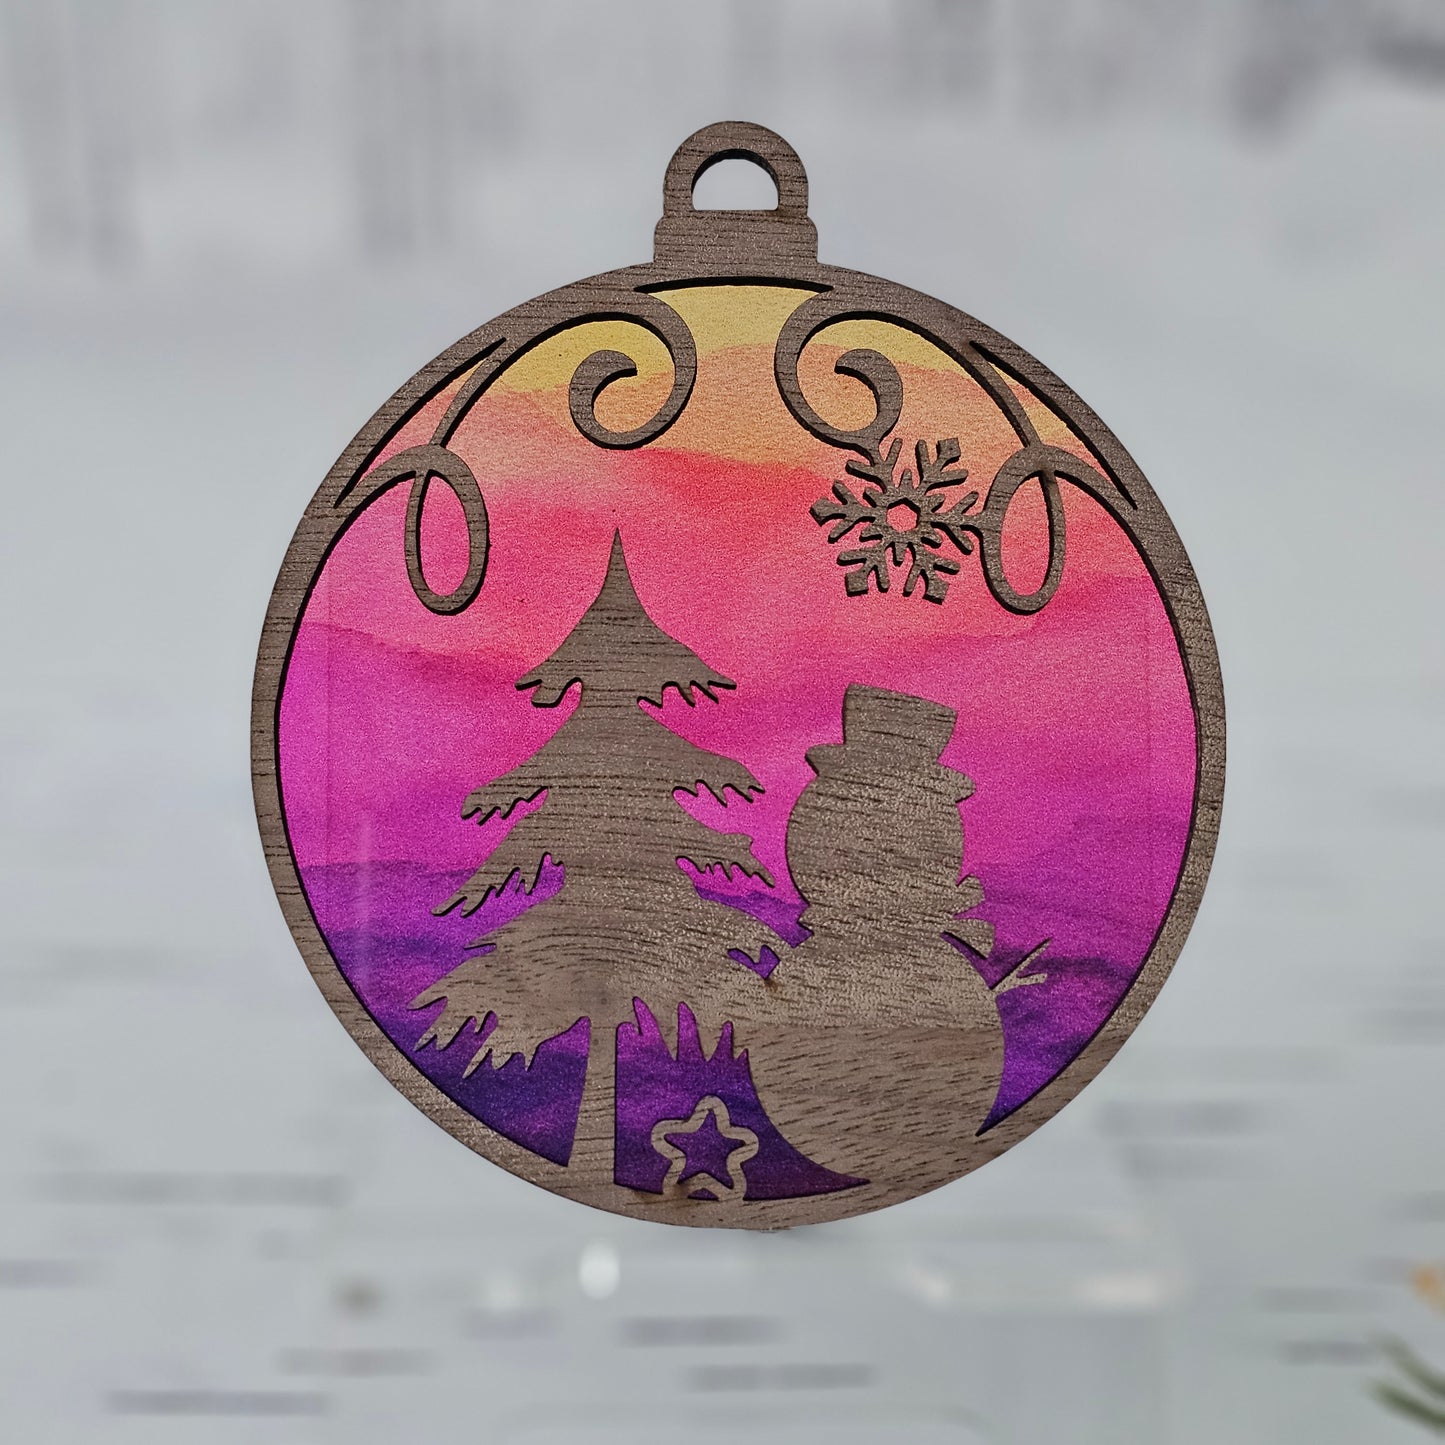 Snowman Ornament - Translucent Sunrise